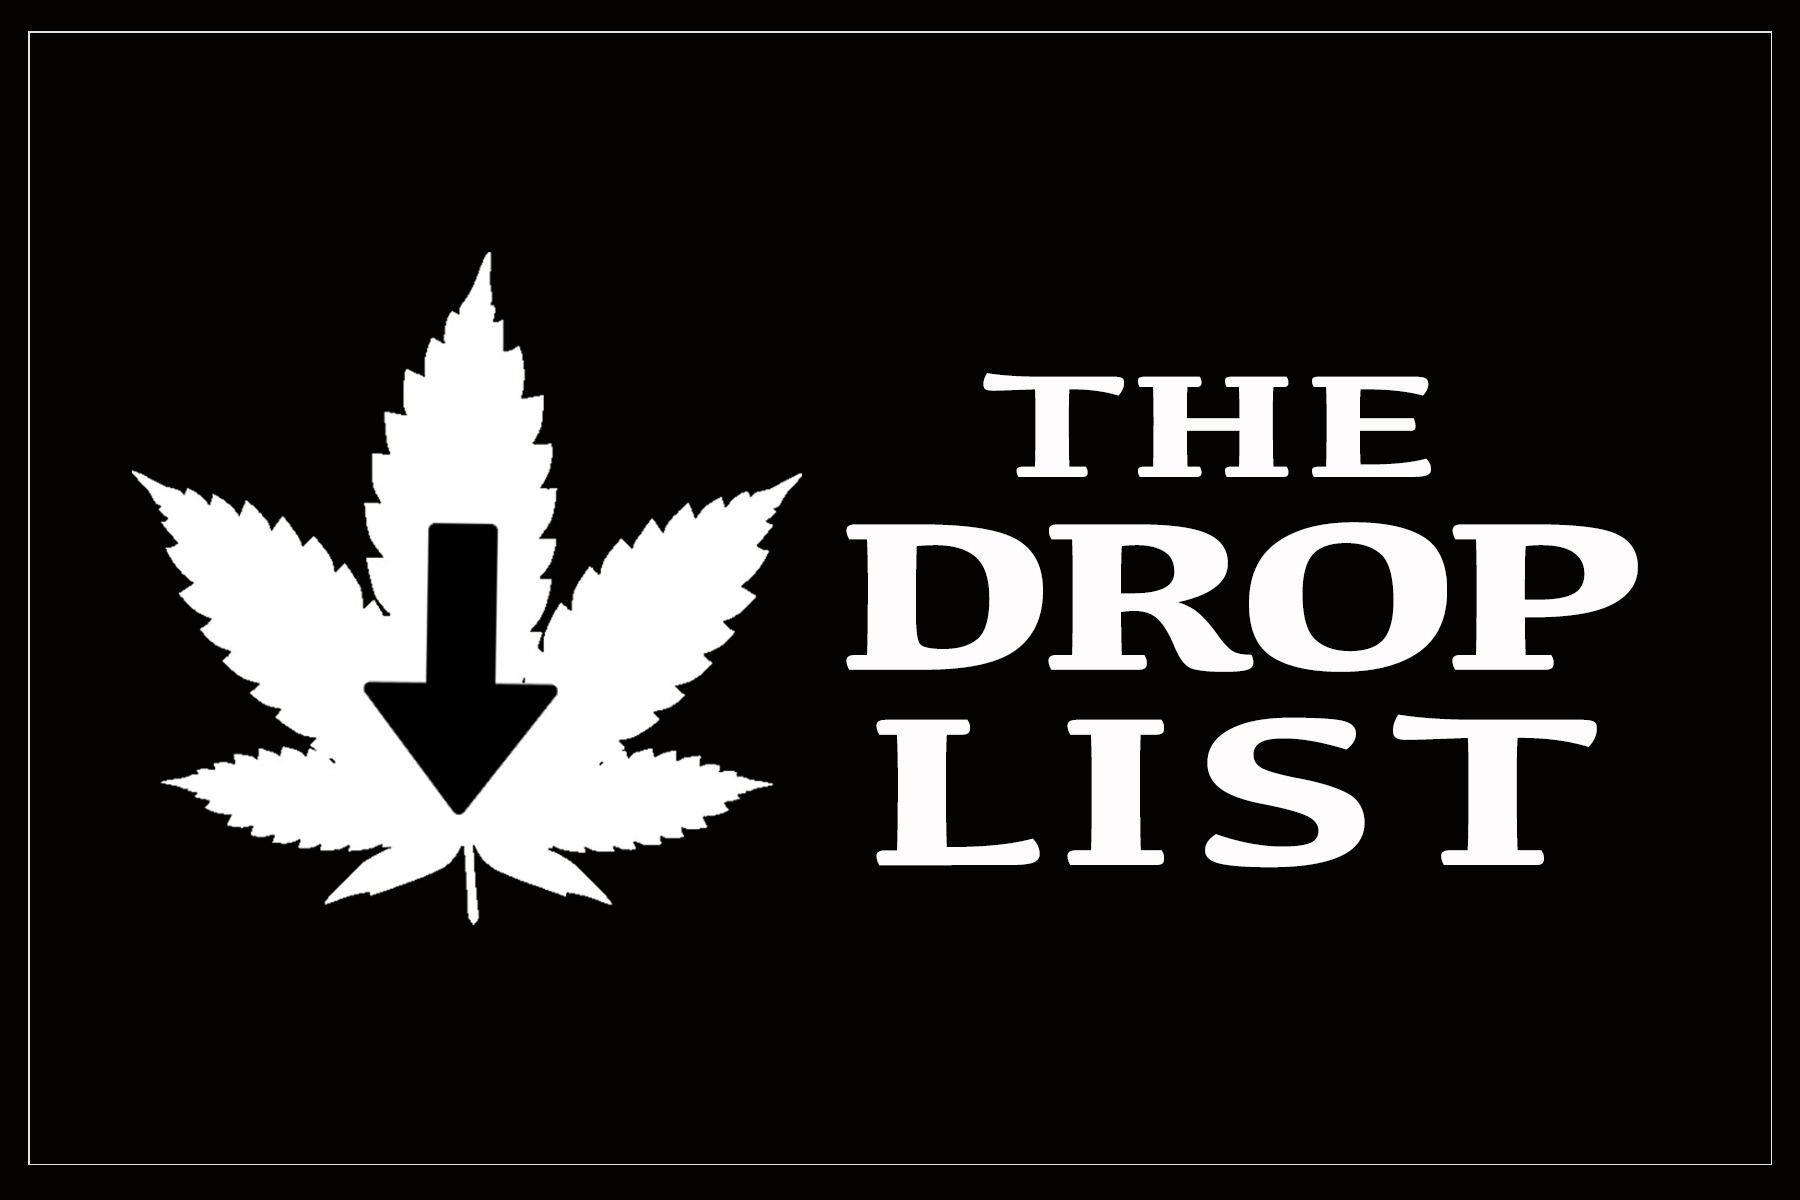 Thursday Drop List